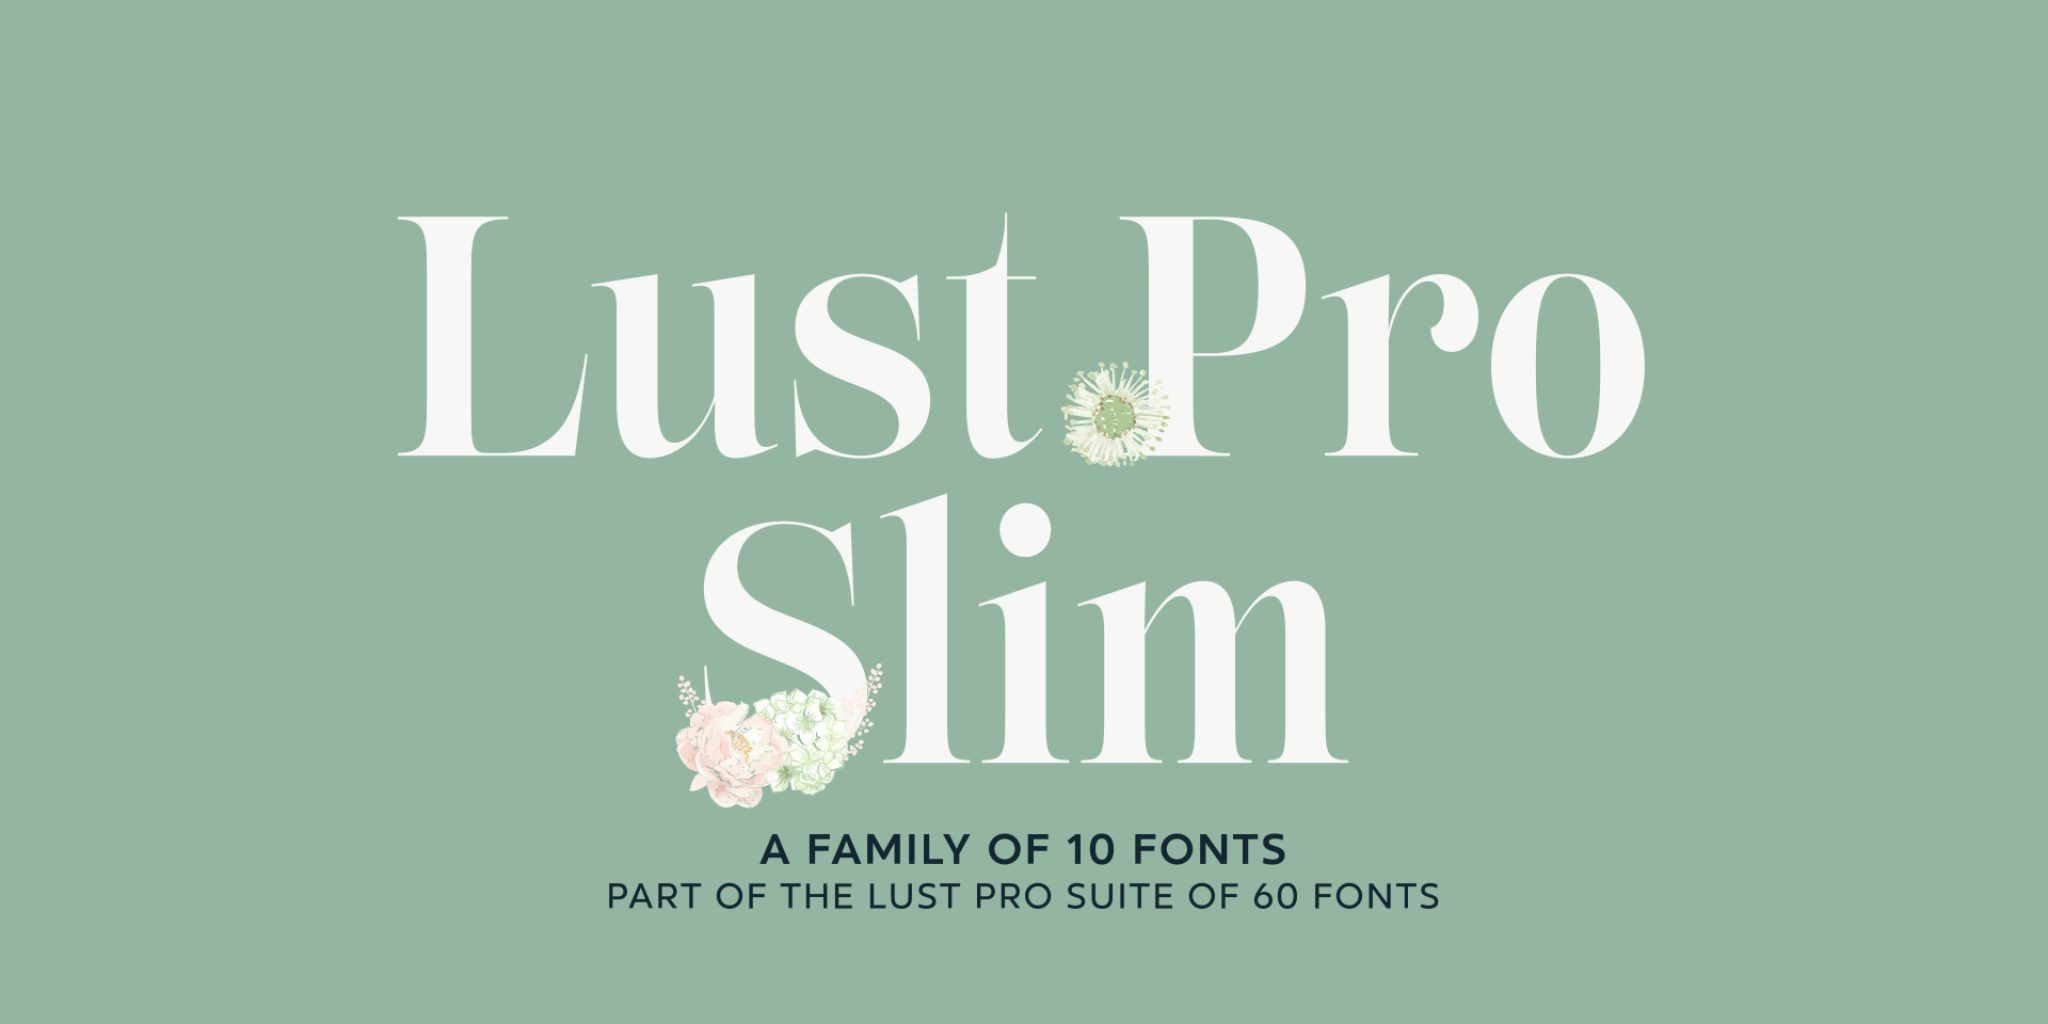 Lust Pro Slim Positype